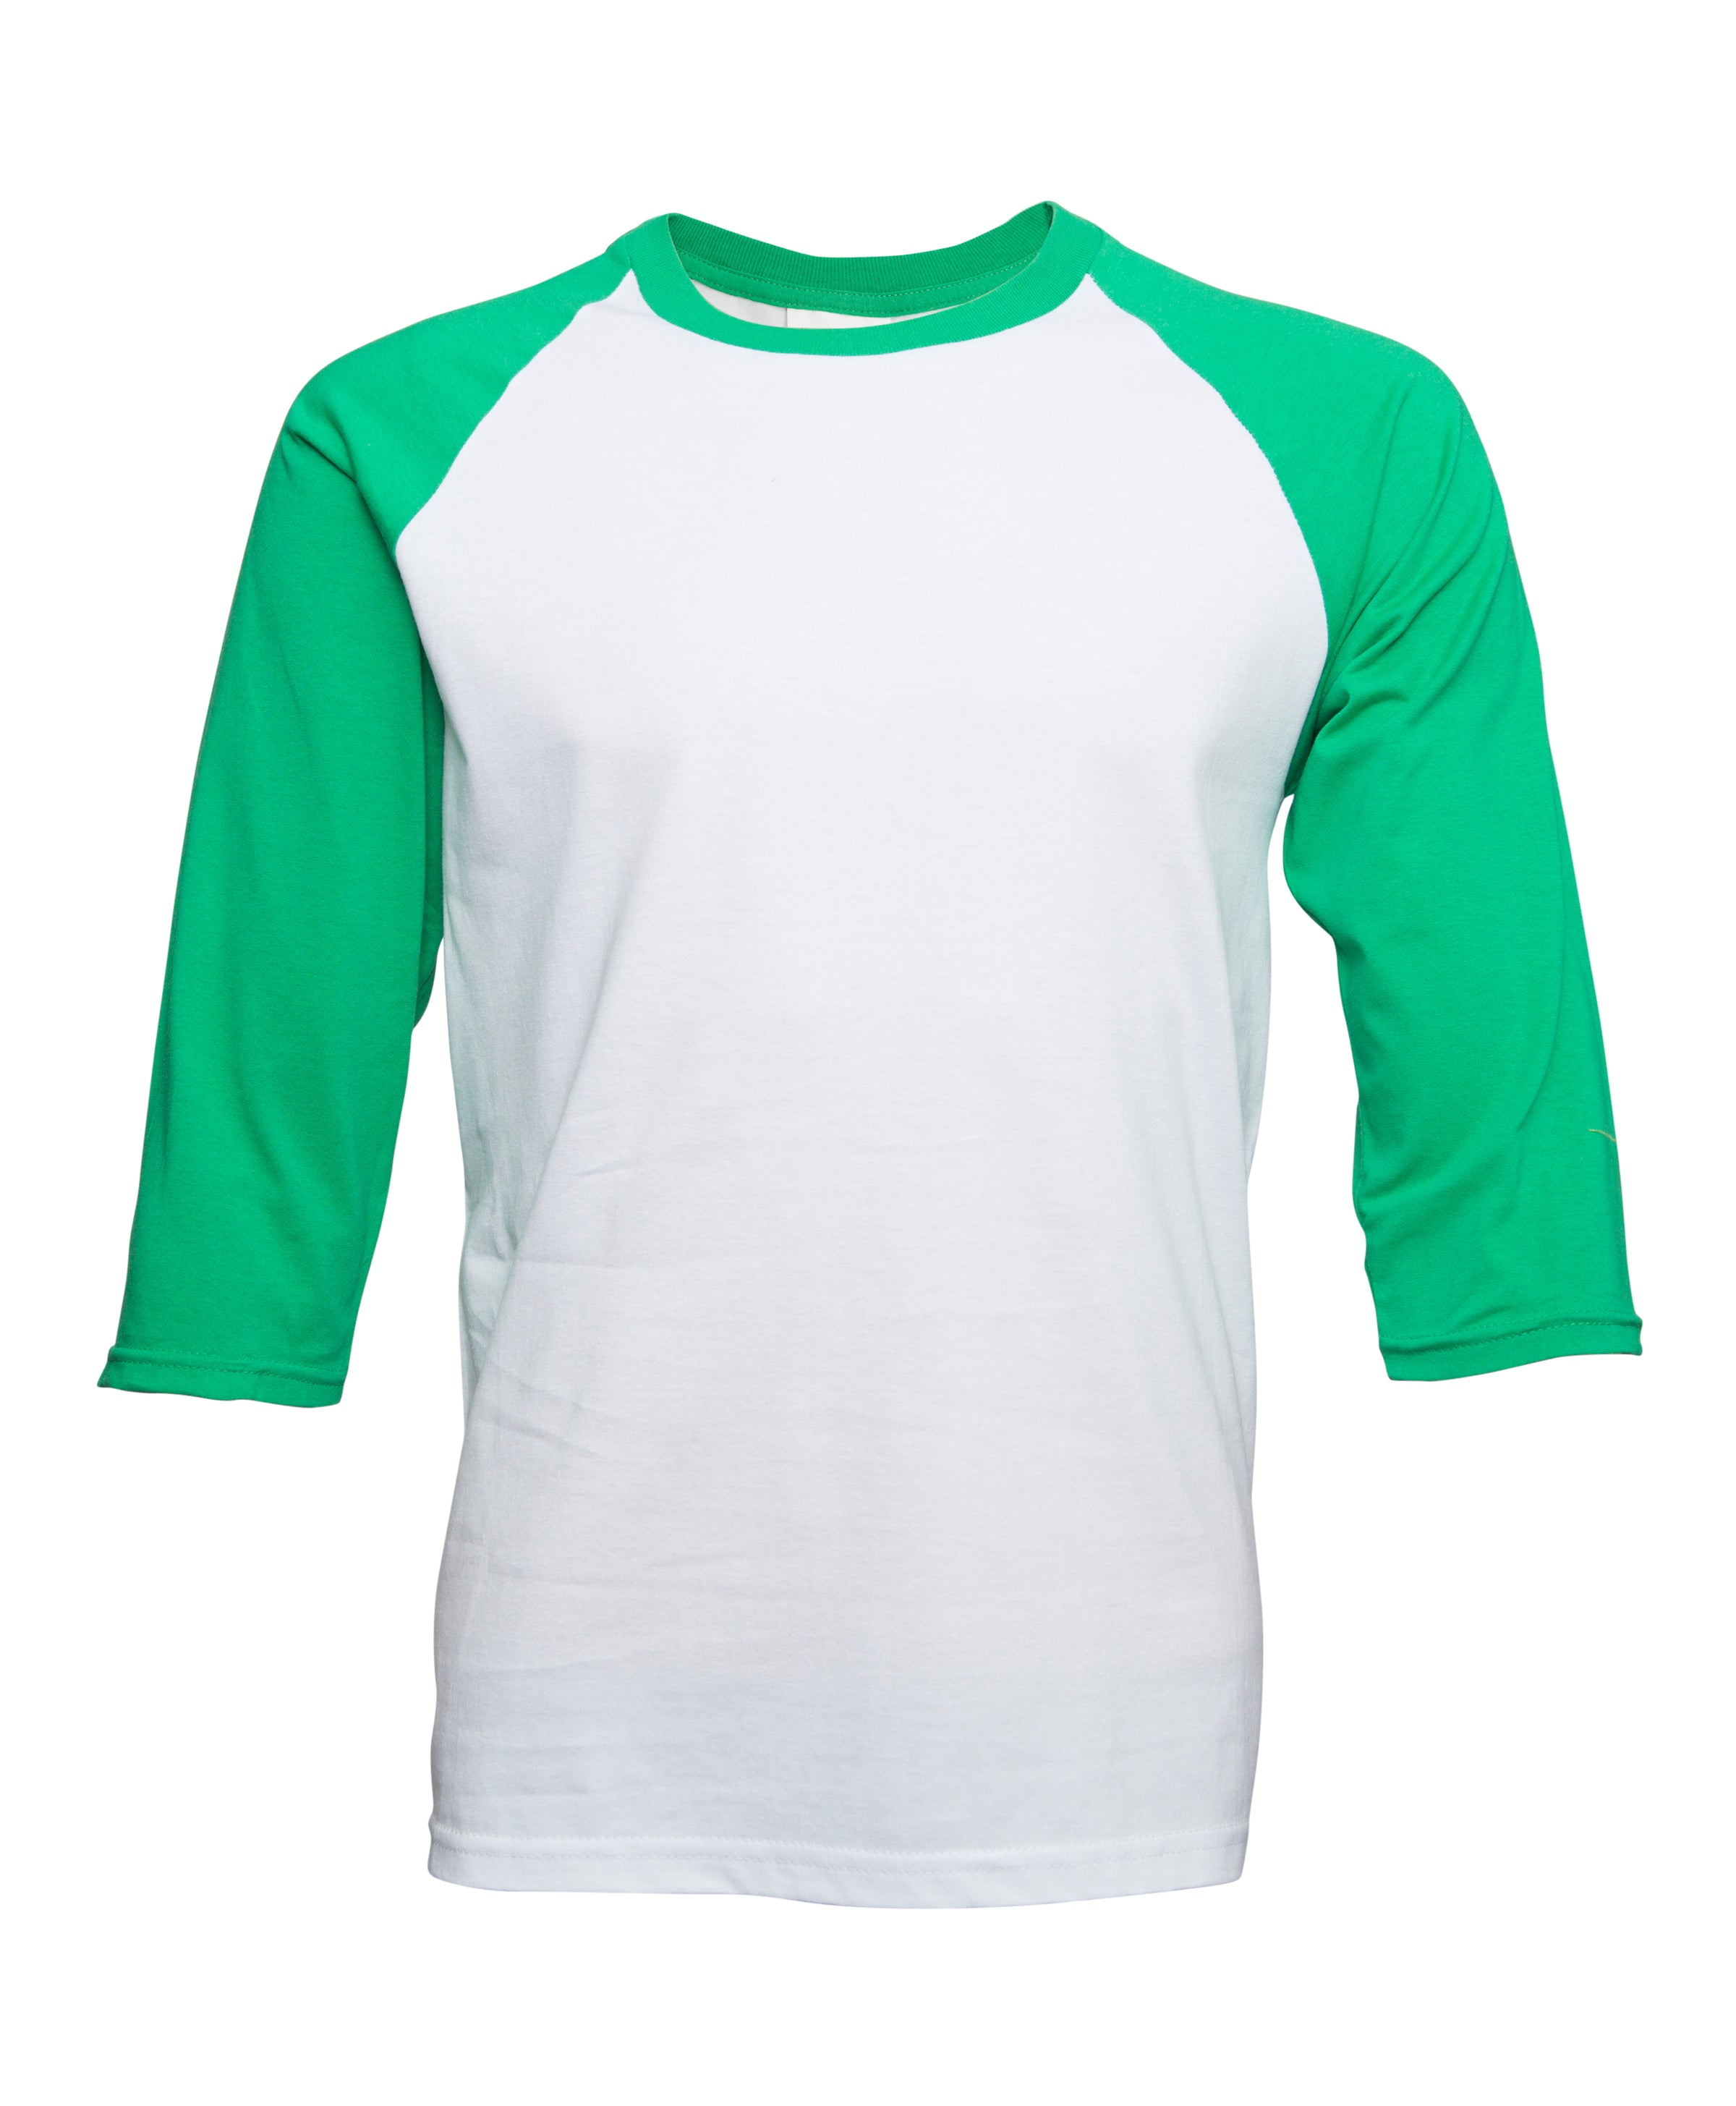 Raglan 3/4 Sleeves Baseball Shirts 